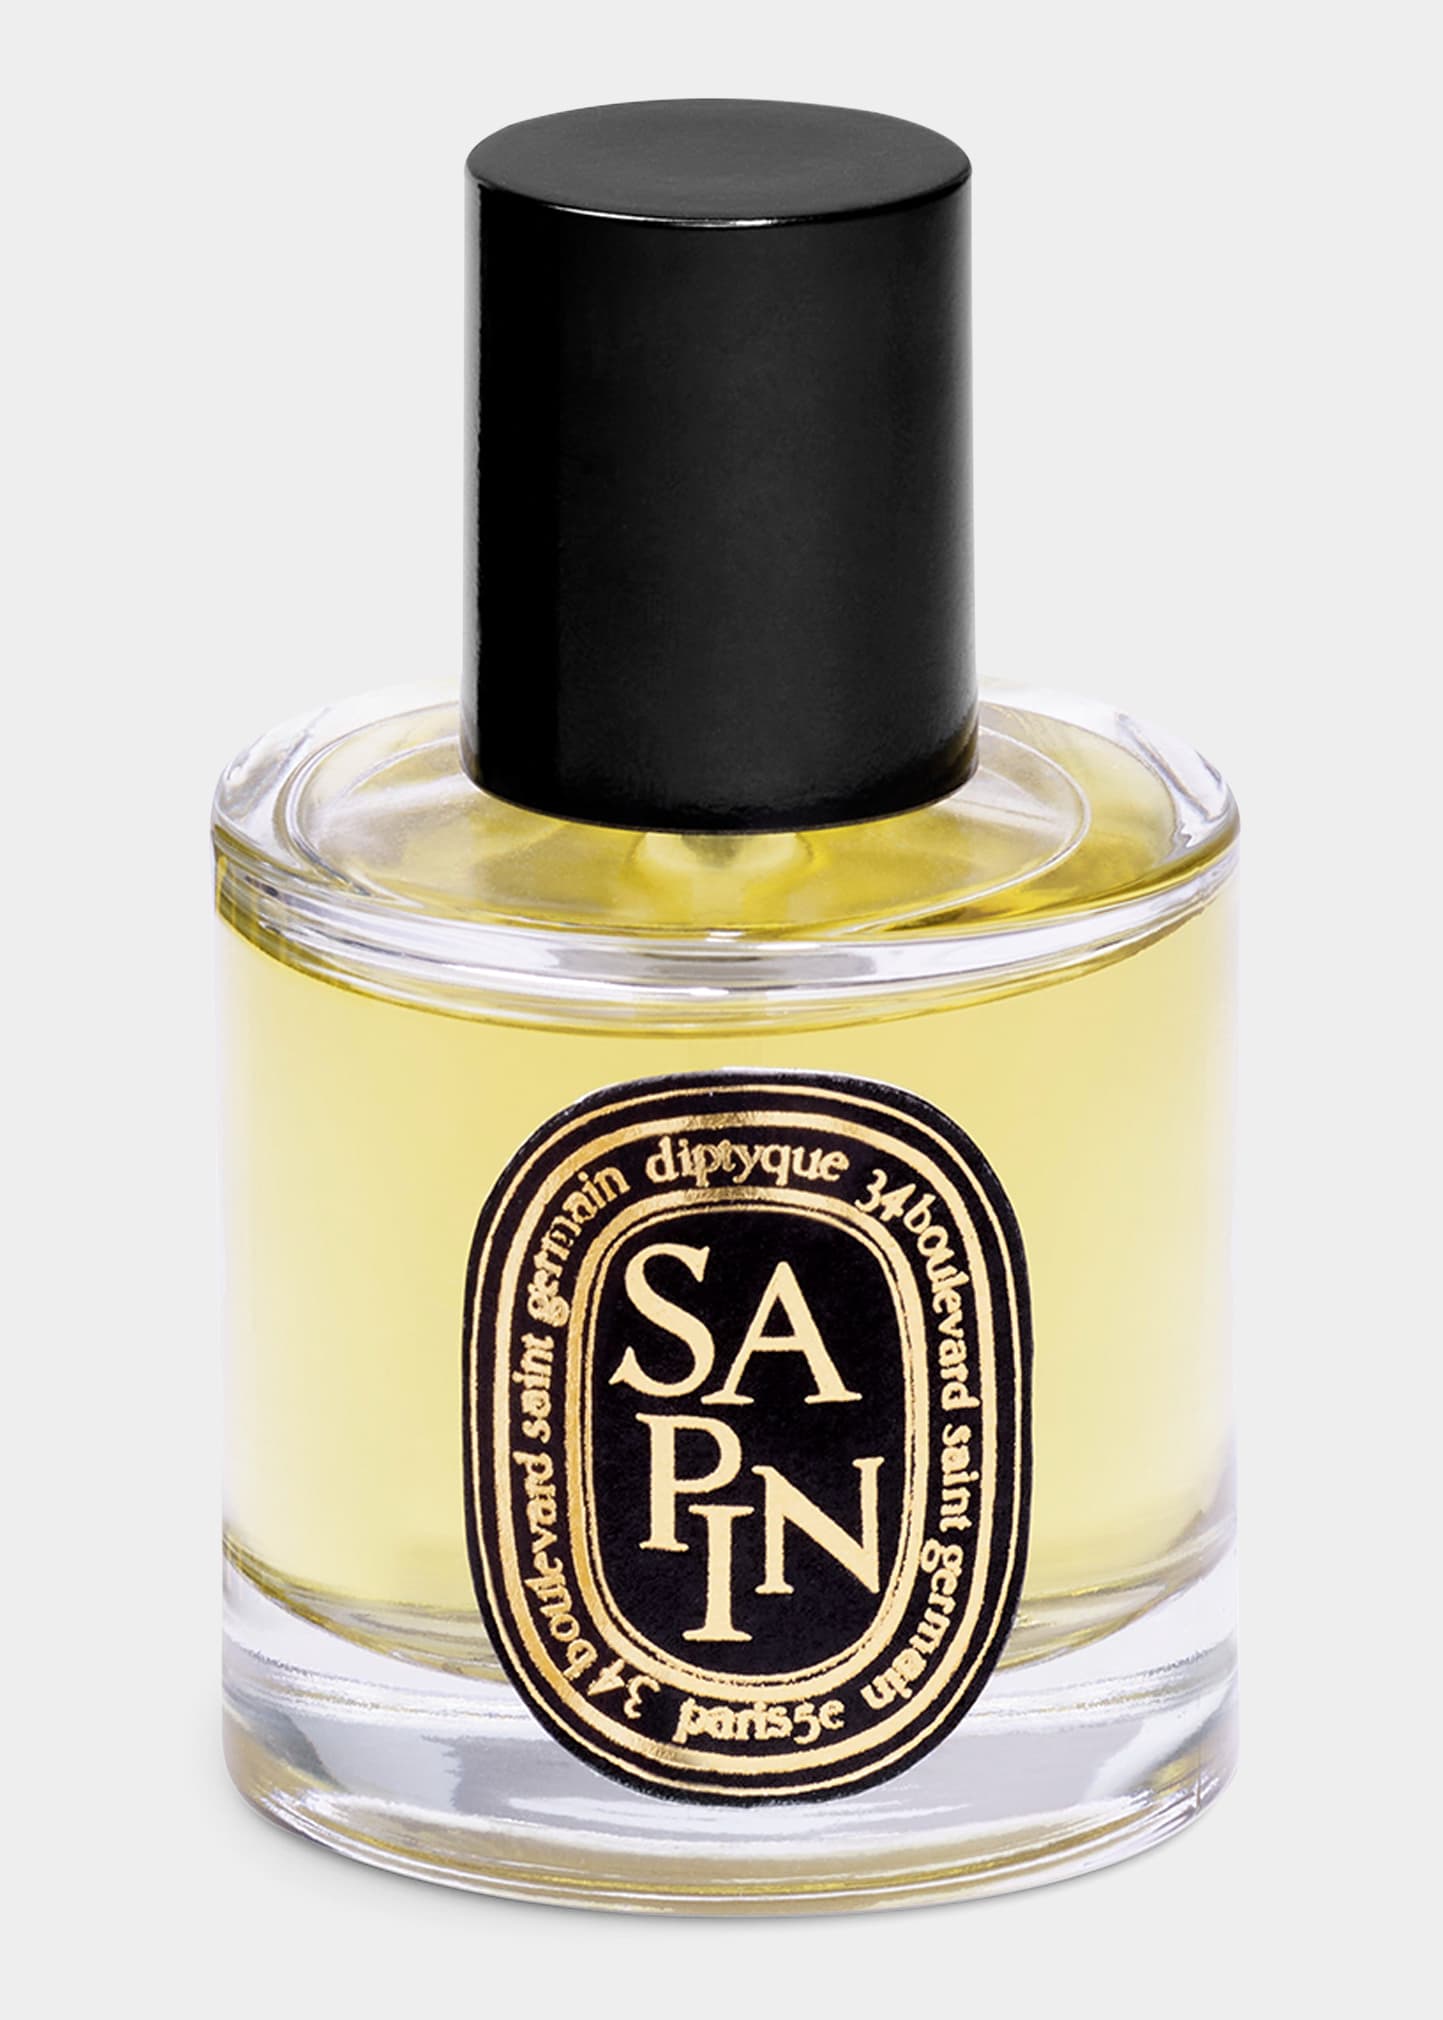 1.7 oz. Sapin (Pine) Room Spray - Limited Edition